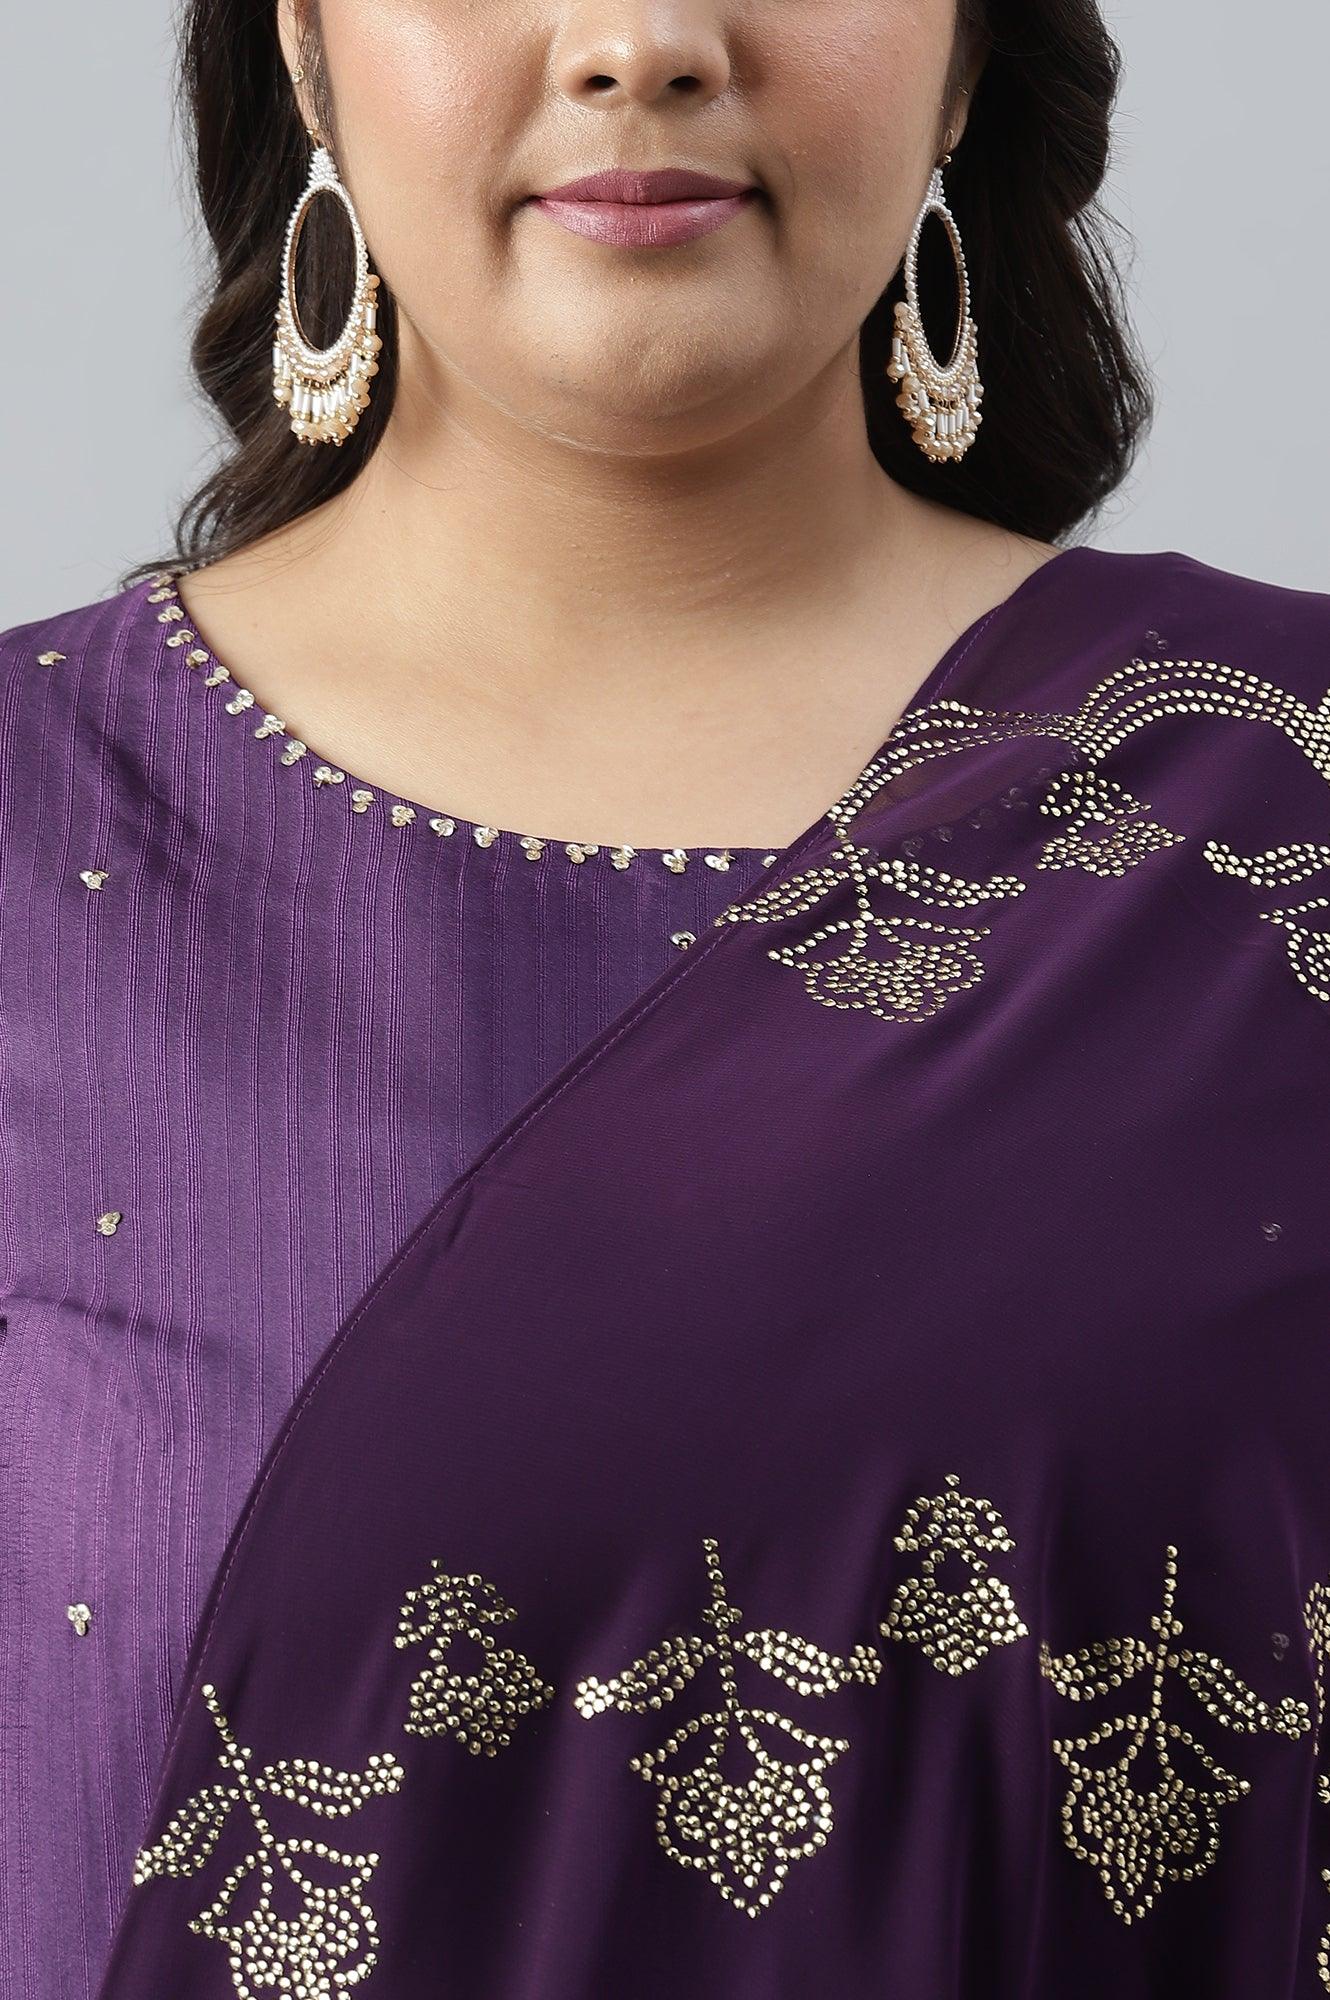 Pdeep Purple Karnatka Silk Plus Size kurta With Green Slim Pants And Mukaish Dupatta - wforwoman